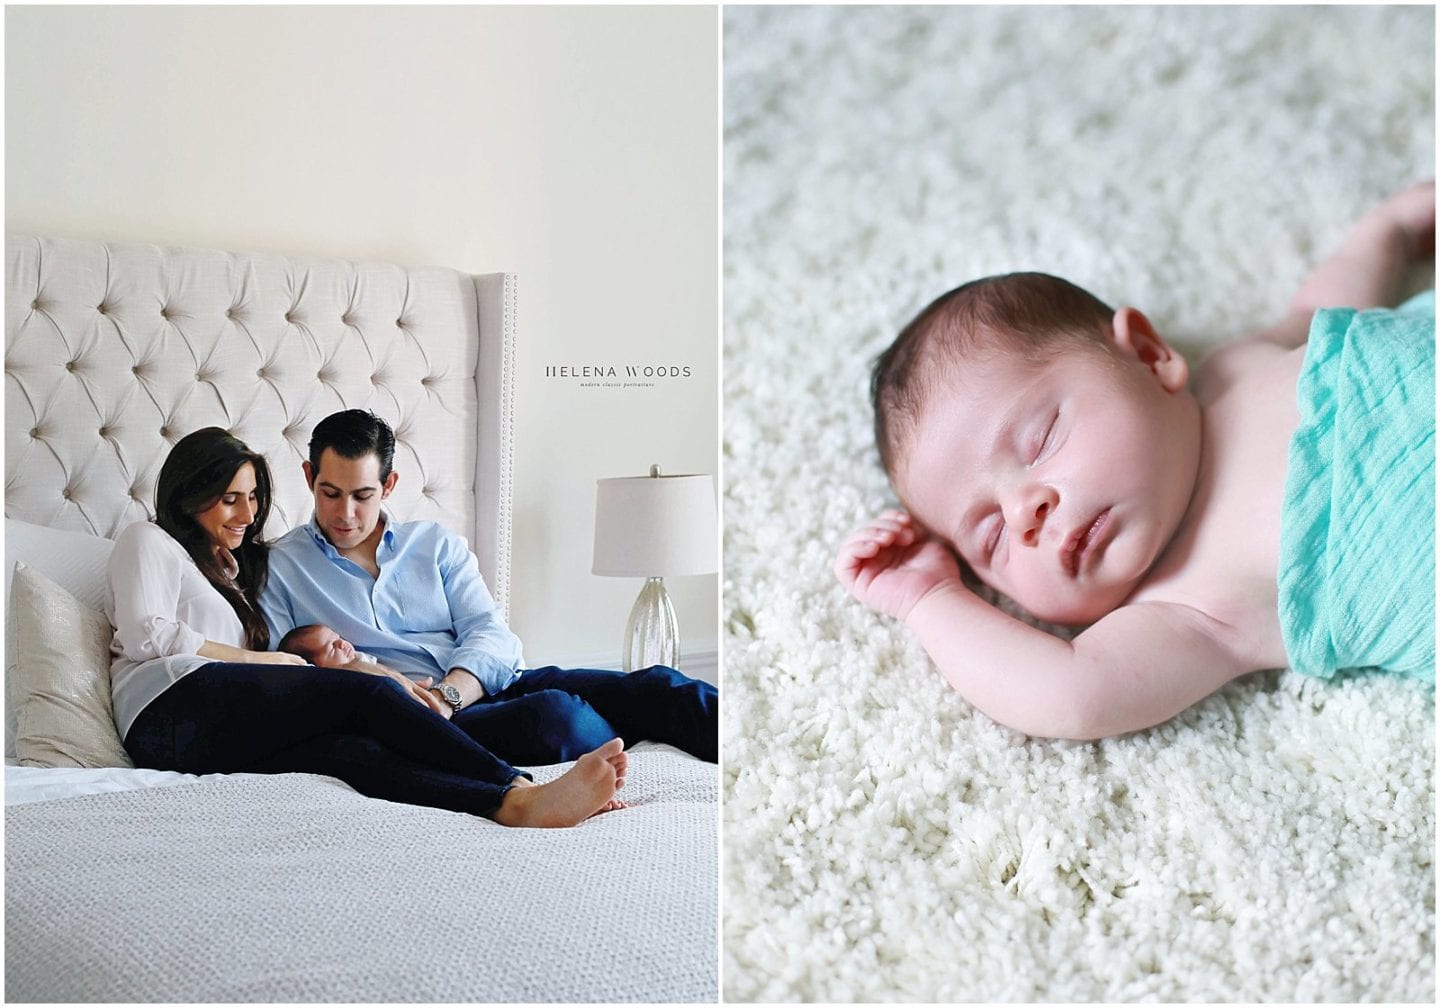 Helena Woods photographs NYC Manhattan newborn lifestyle session